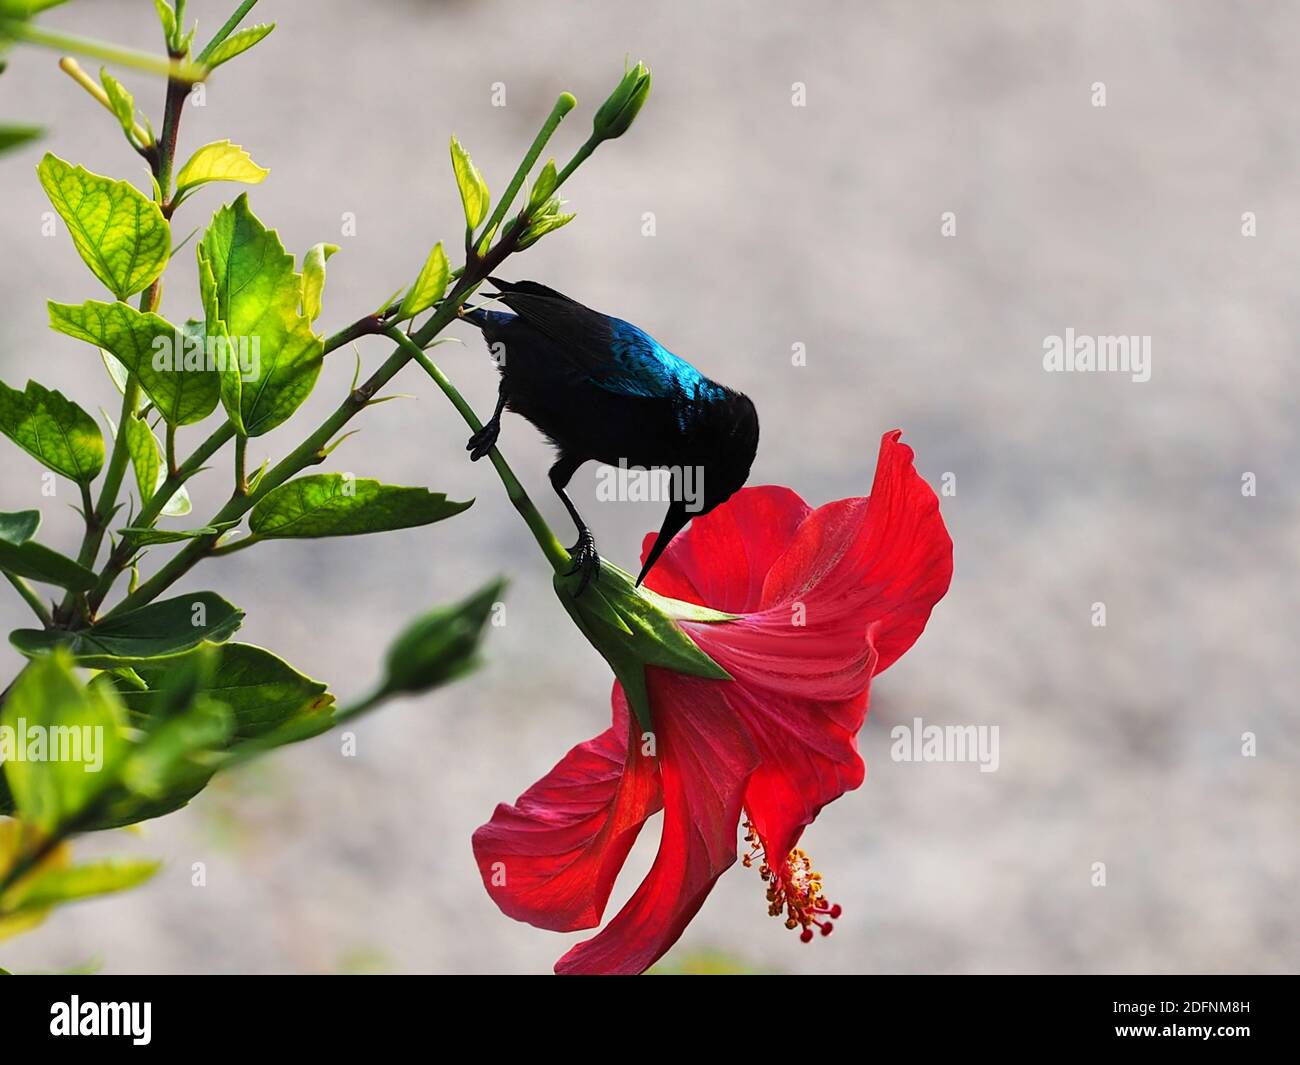 The Palestine sunbird is a small passerine bird of the sunbird family. Stock Photo